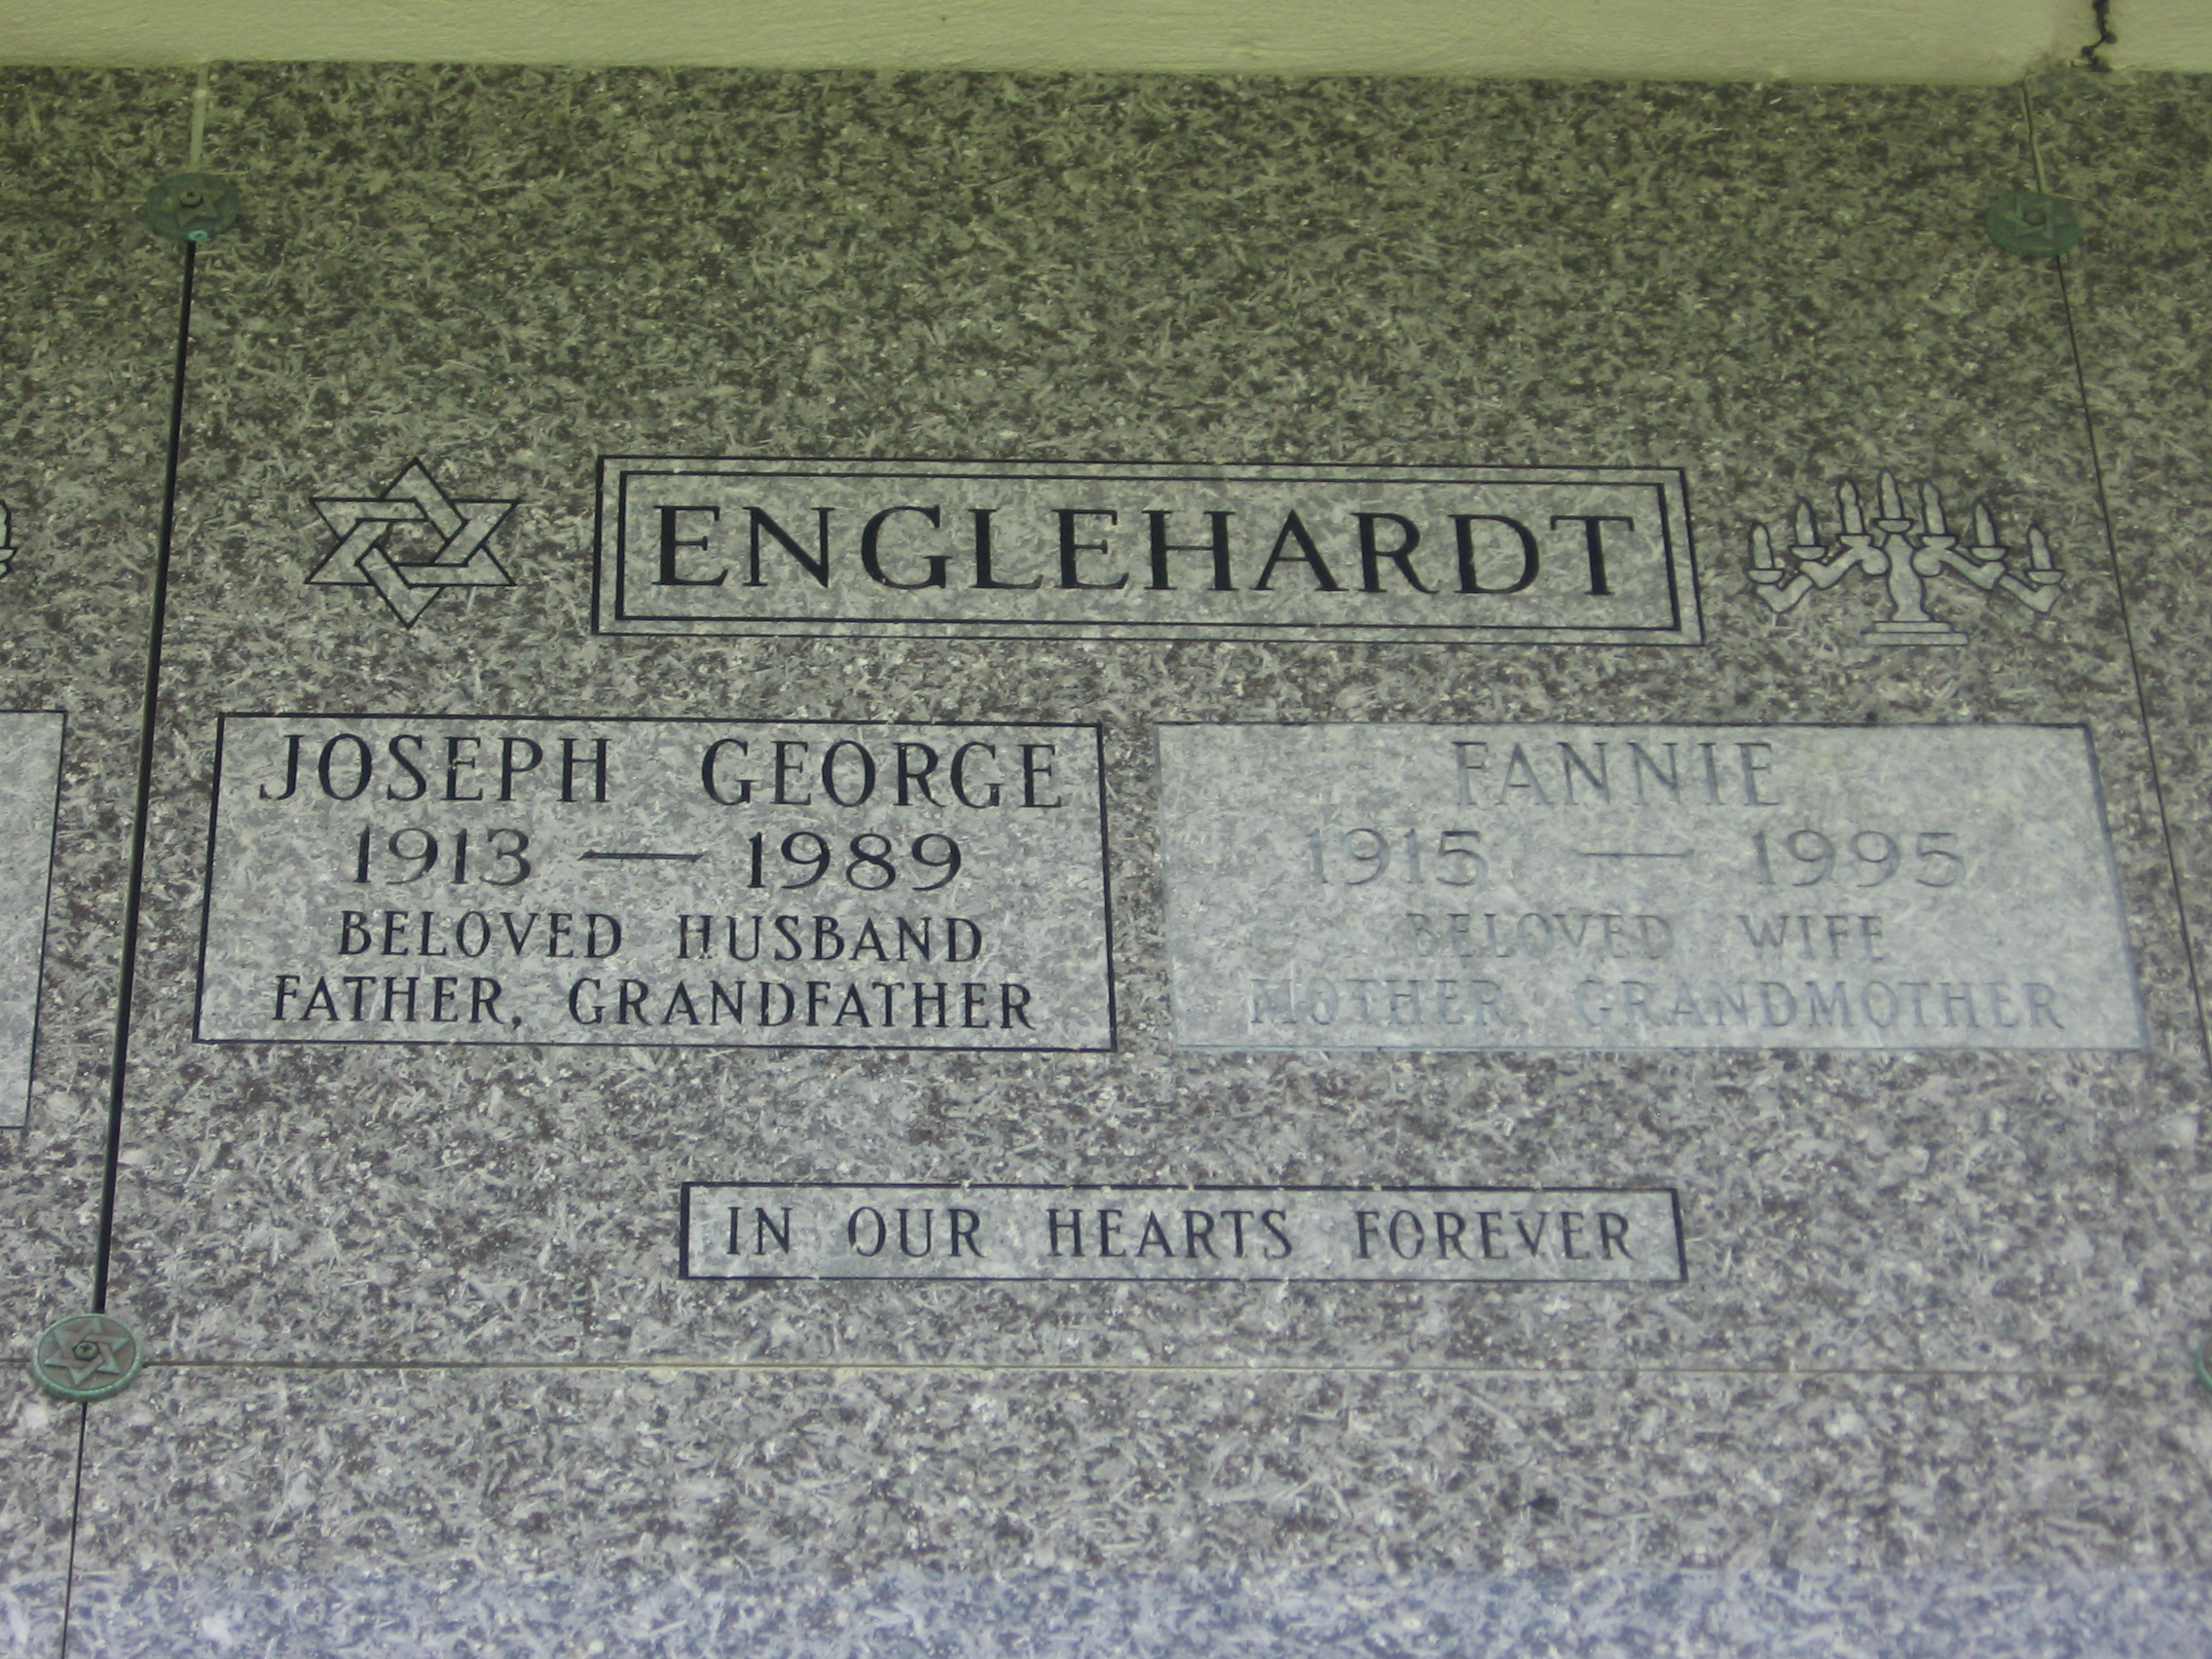 Joseph George Englehardt